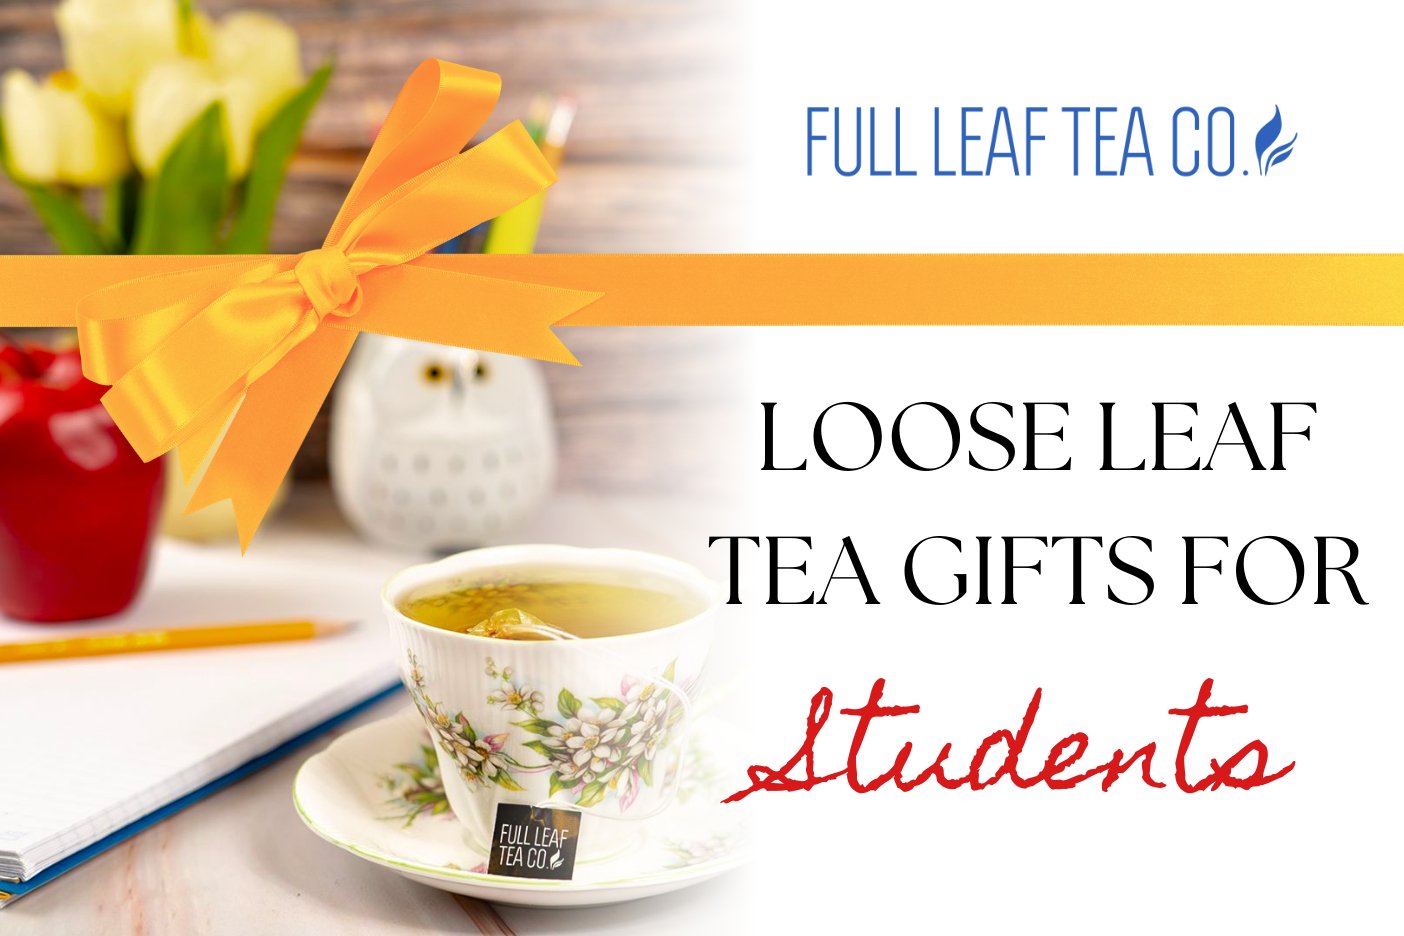 Loose Leaf Tea Gifts for Students - Full Leaf Tea Company